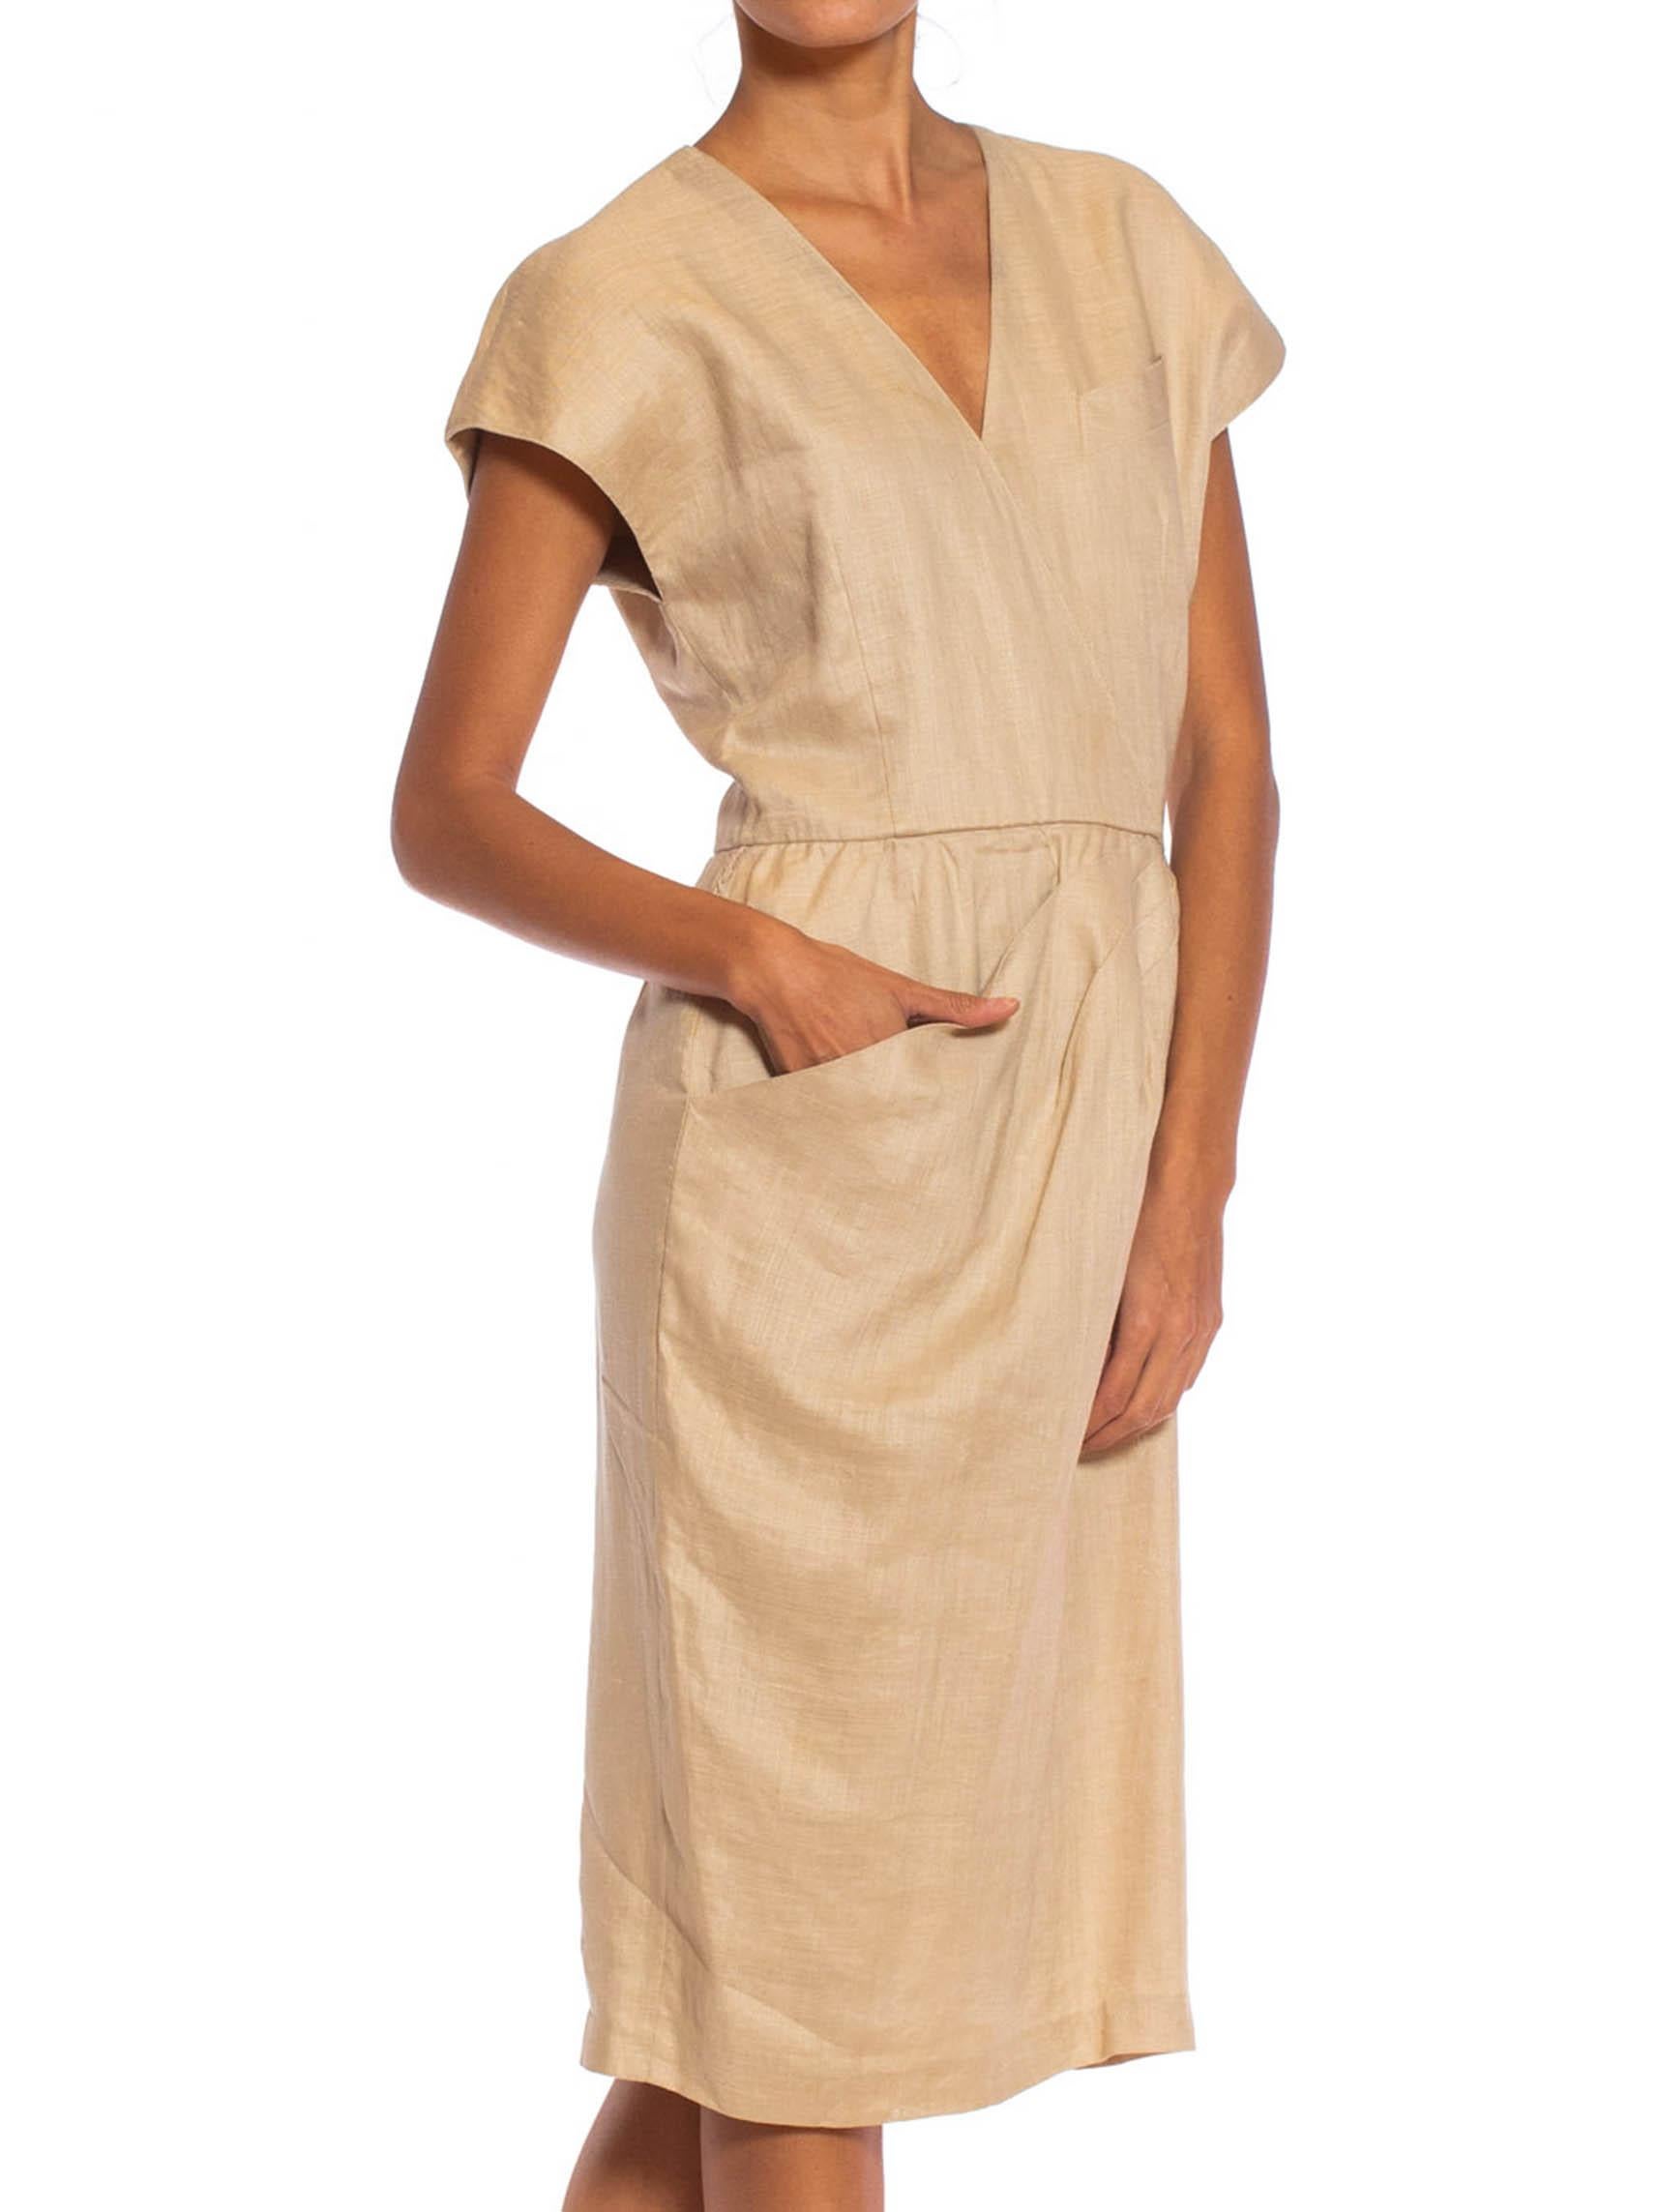 1980S Beige Linen Blend Dress Lined In Rayon For Sale 2